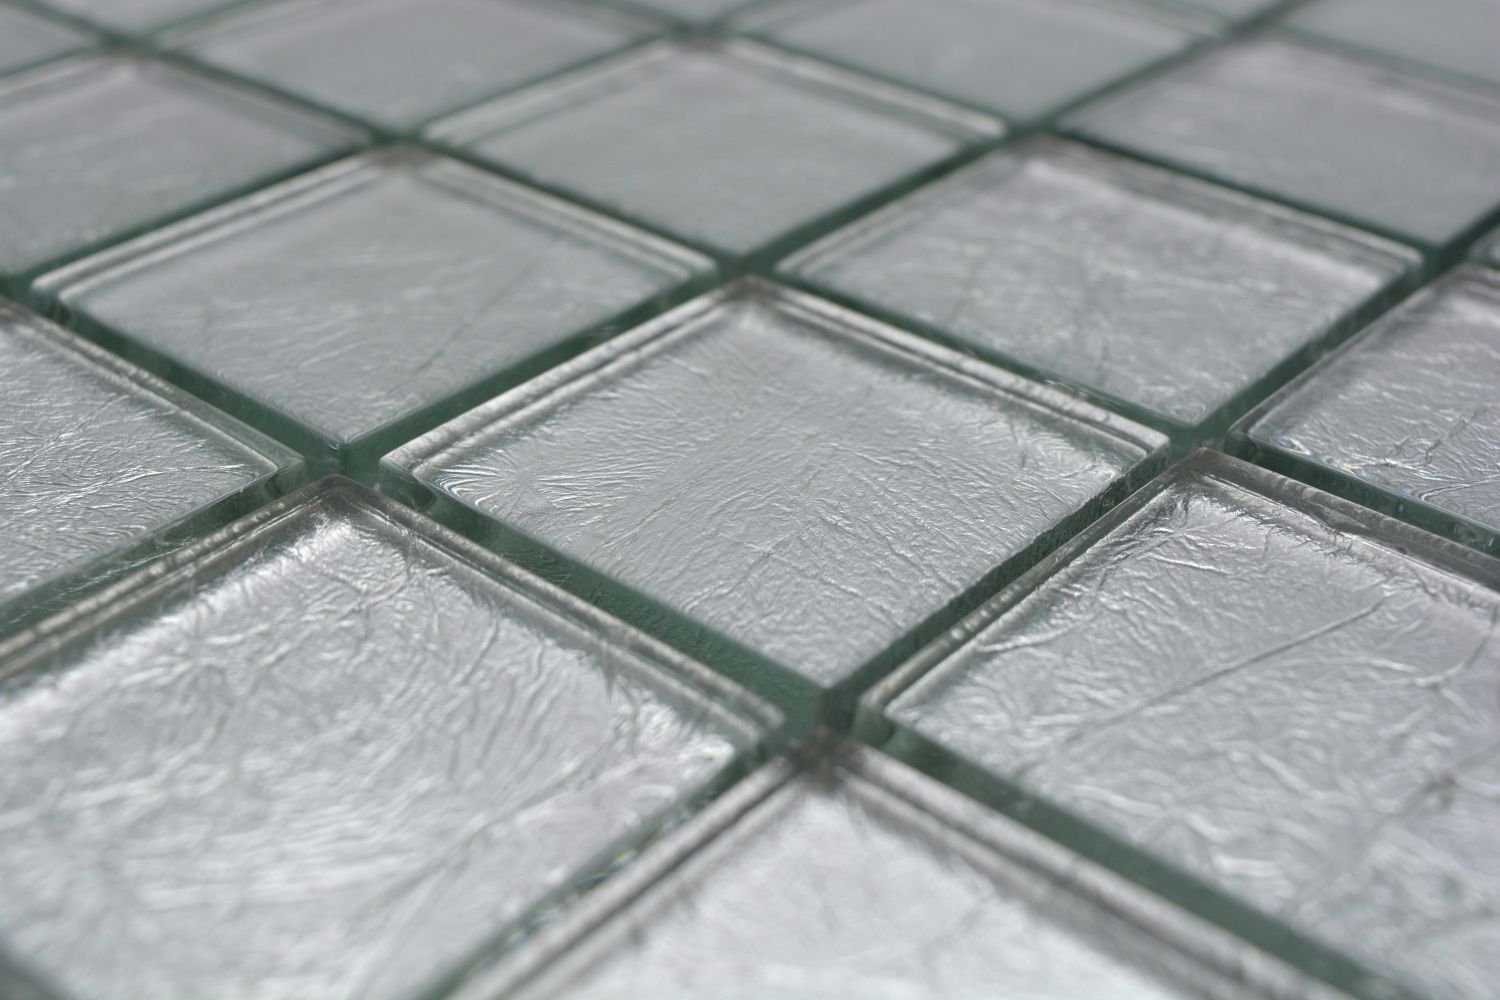 Crystal 10 Matten silber Mosani Mosaikfliesen Glasmosaik Mosaikfliesen / glänzend